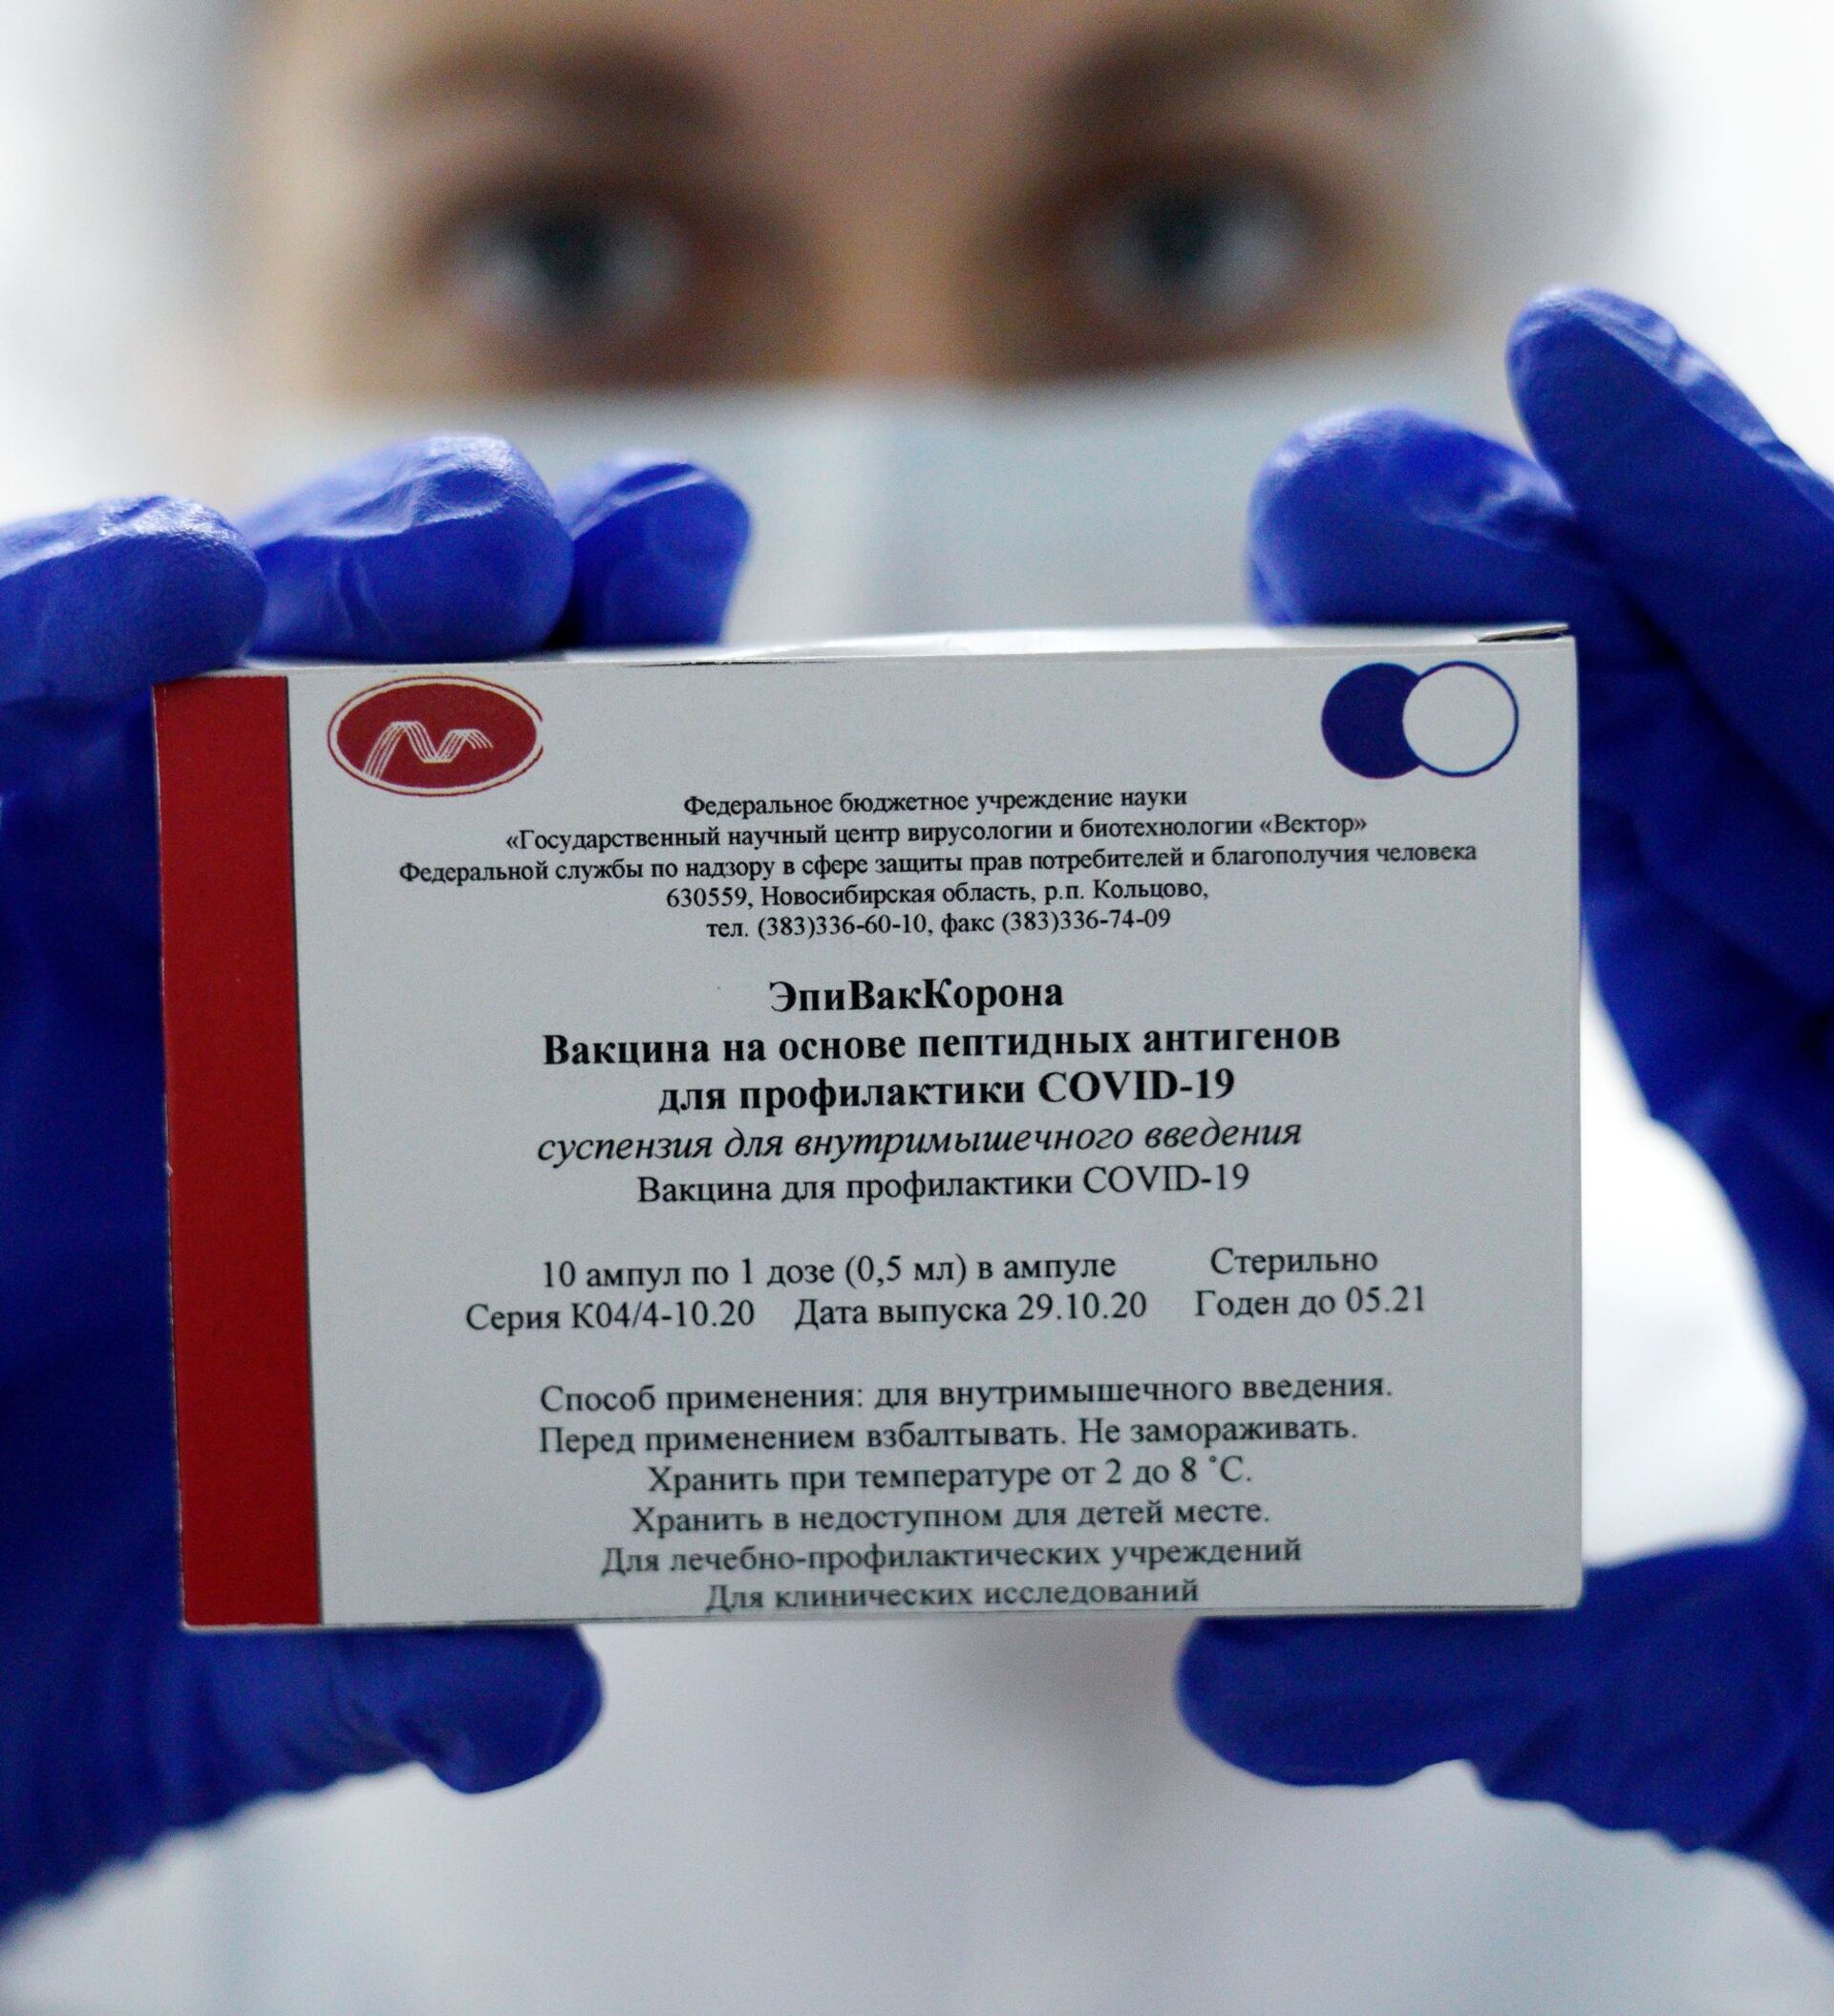 Вакцина испытана. Эпиваккорона вакцина. Новосибирская вакцина эпиваккорона. Вакцина от коронавируса эпиваккорона.